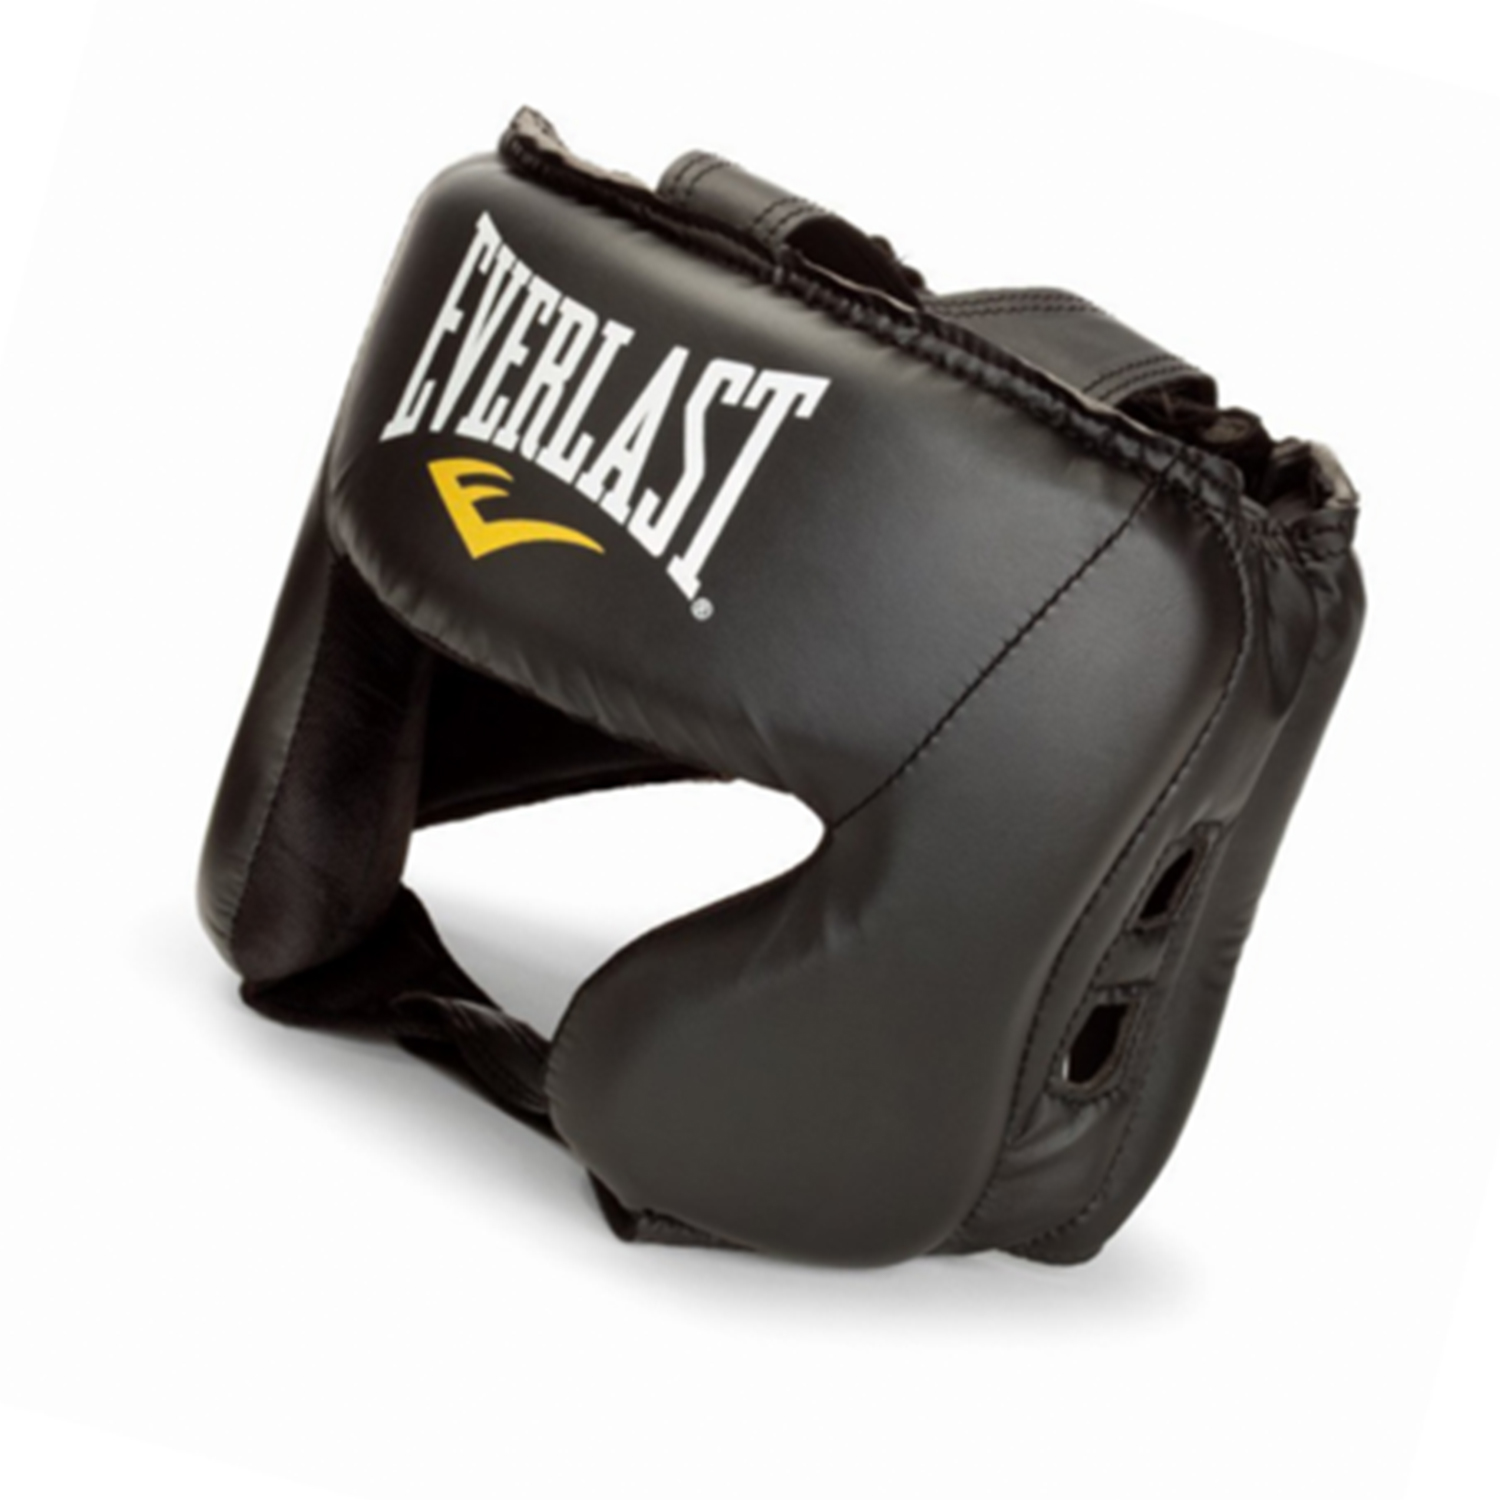 Everlast Everfresh Boxing Protective Headgear - image 5 of 5